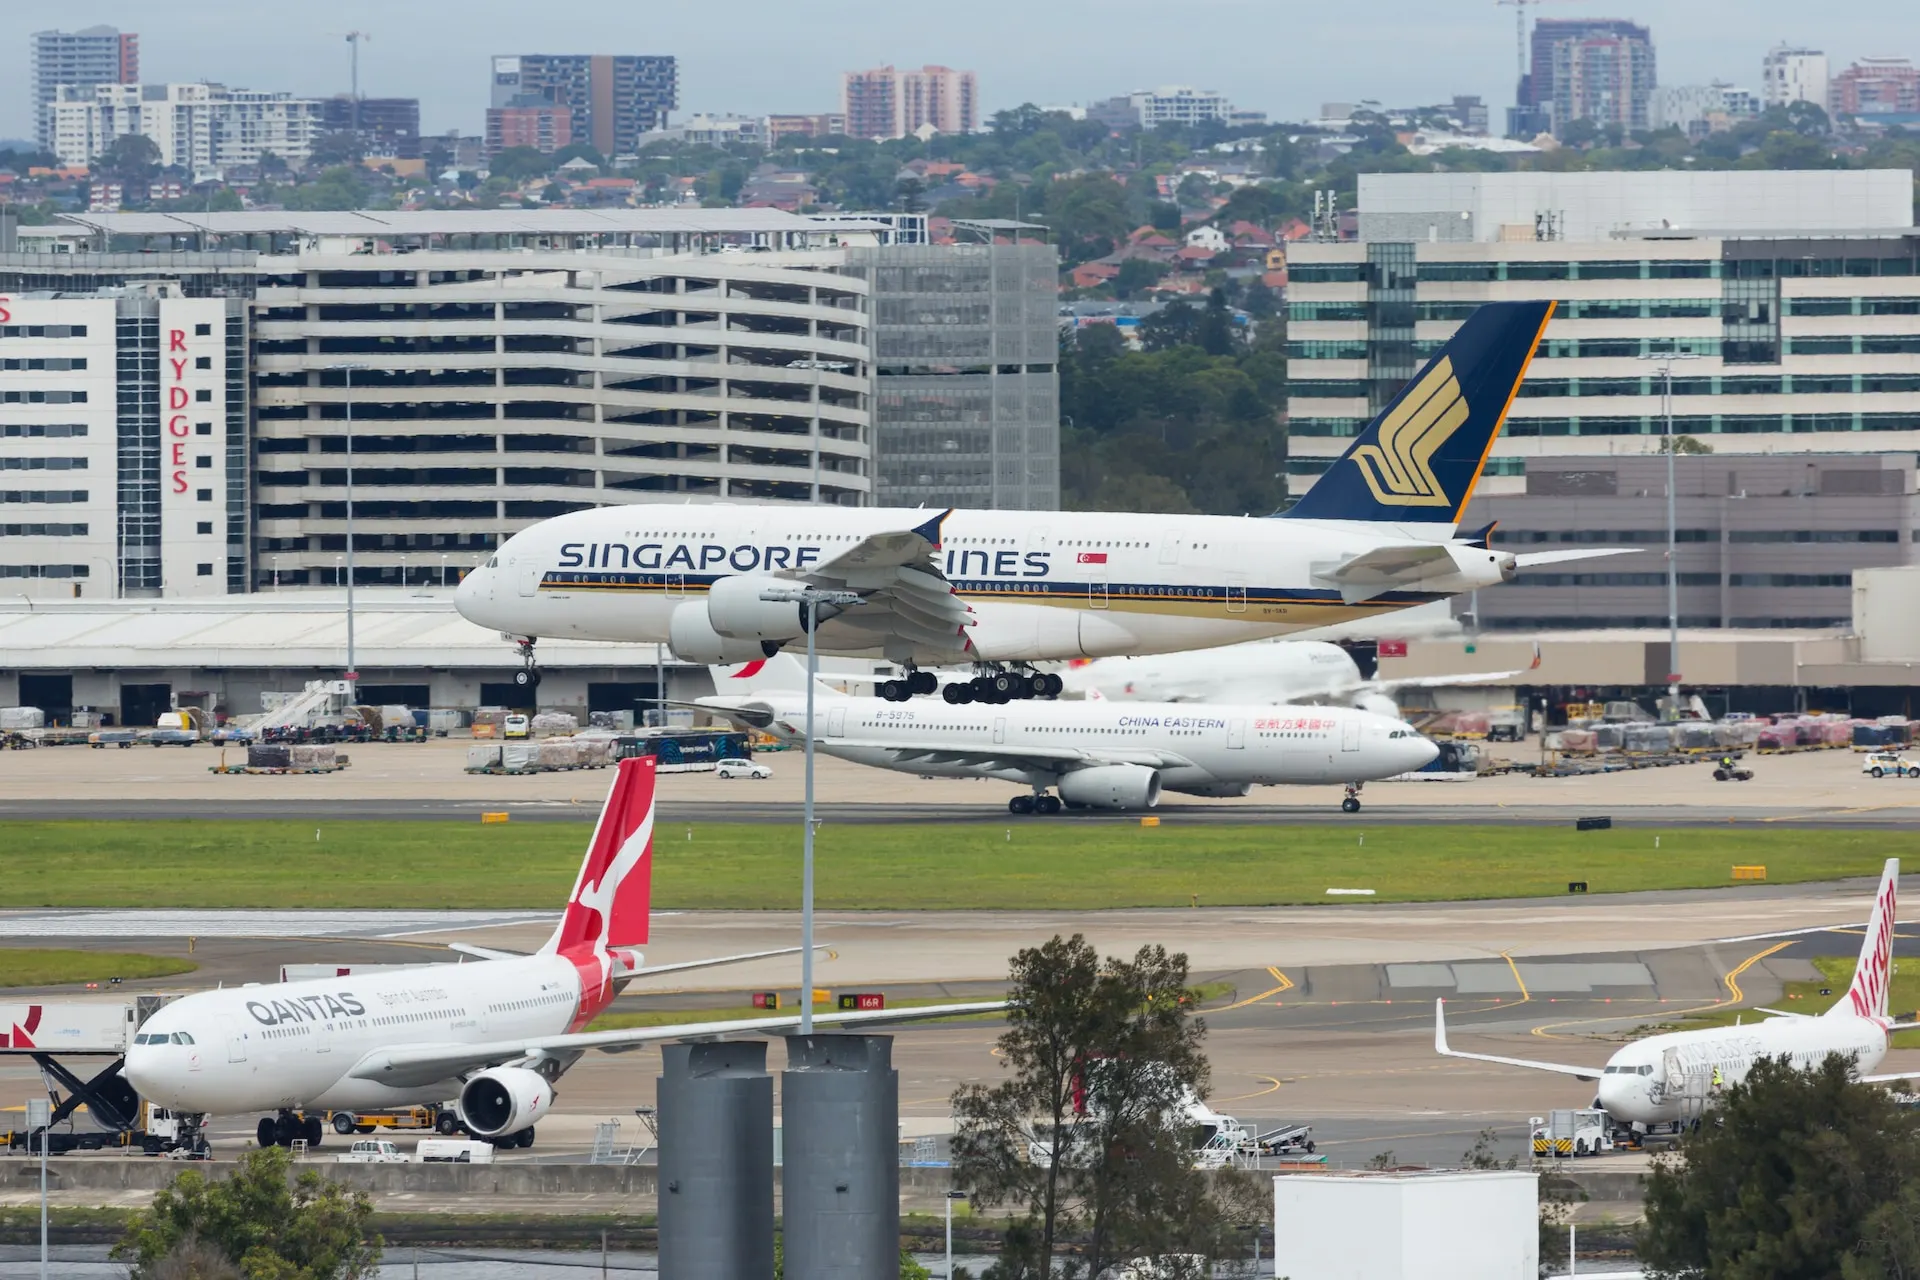 Sydney International Airport. Source: Photo by Troy Mortier on Unsplash